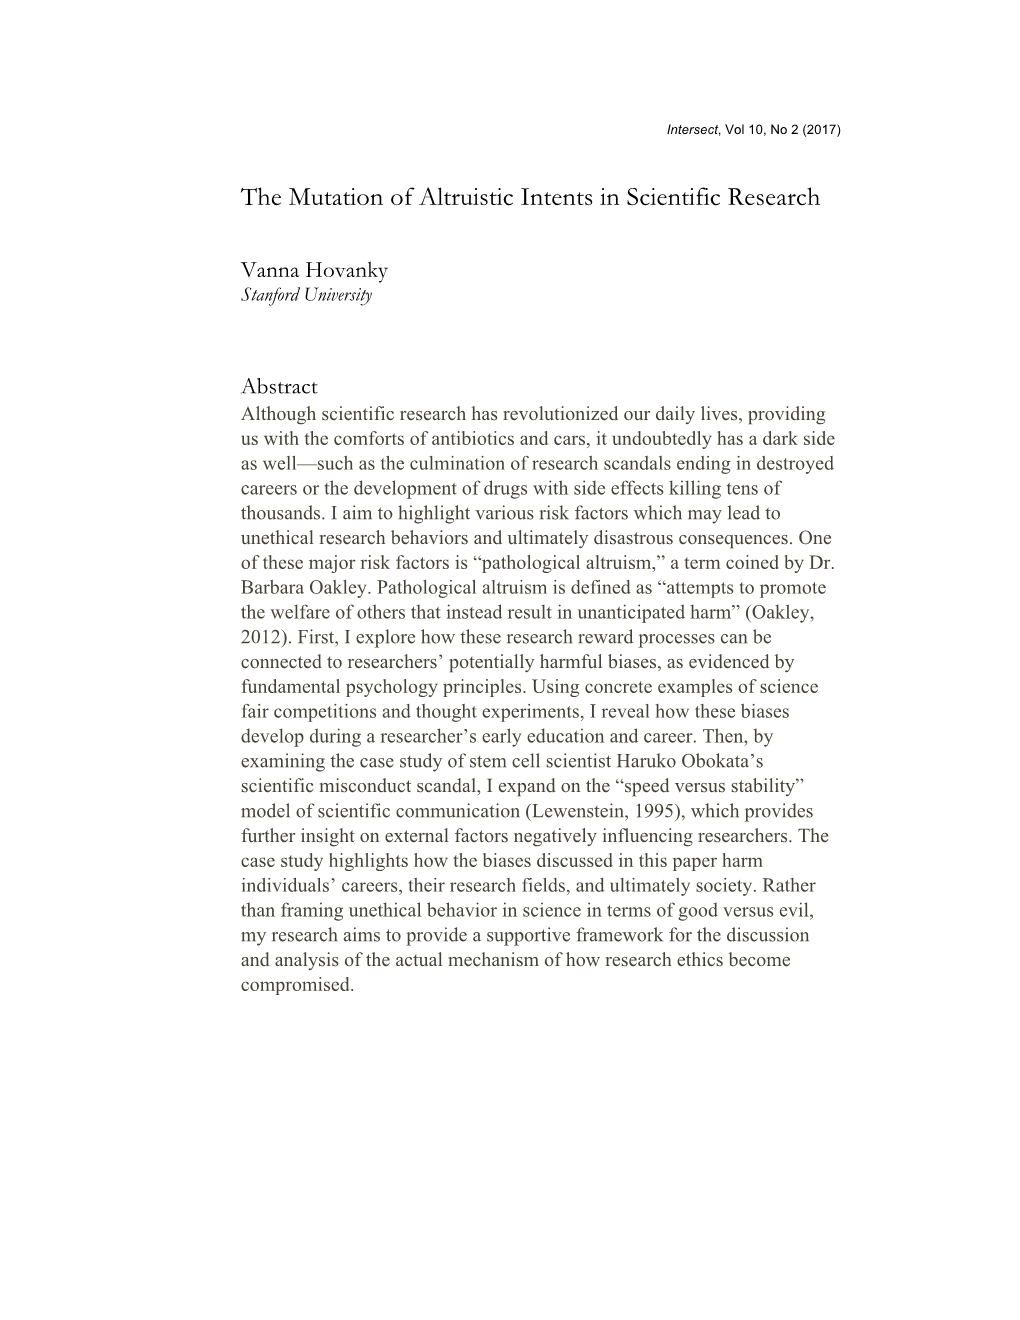 The Mutation of Altruistic Intents in Scientific Research